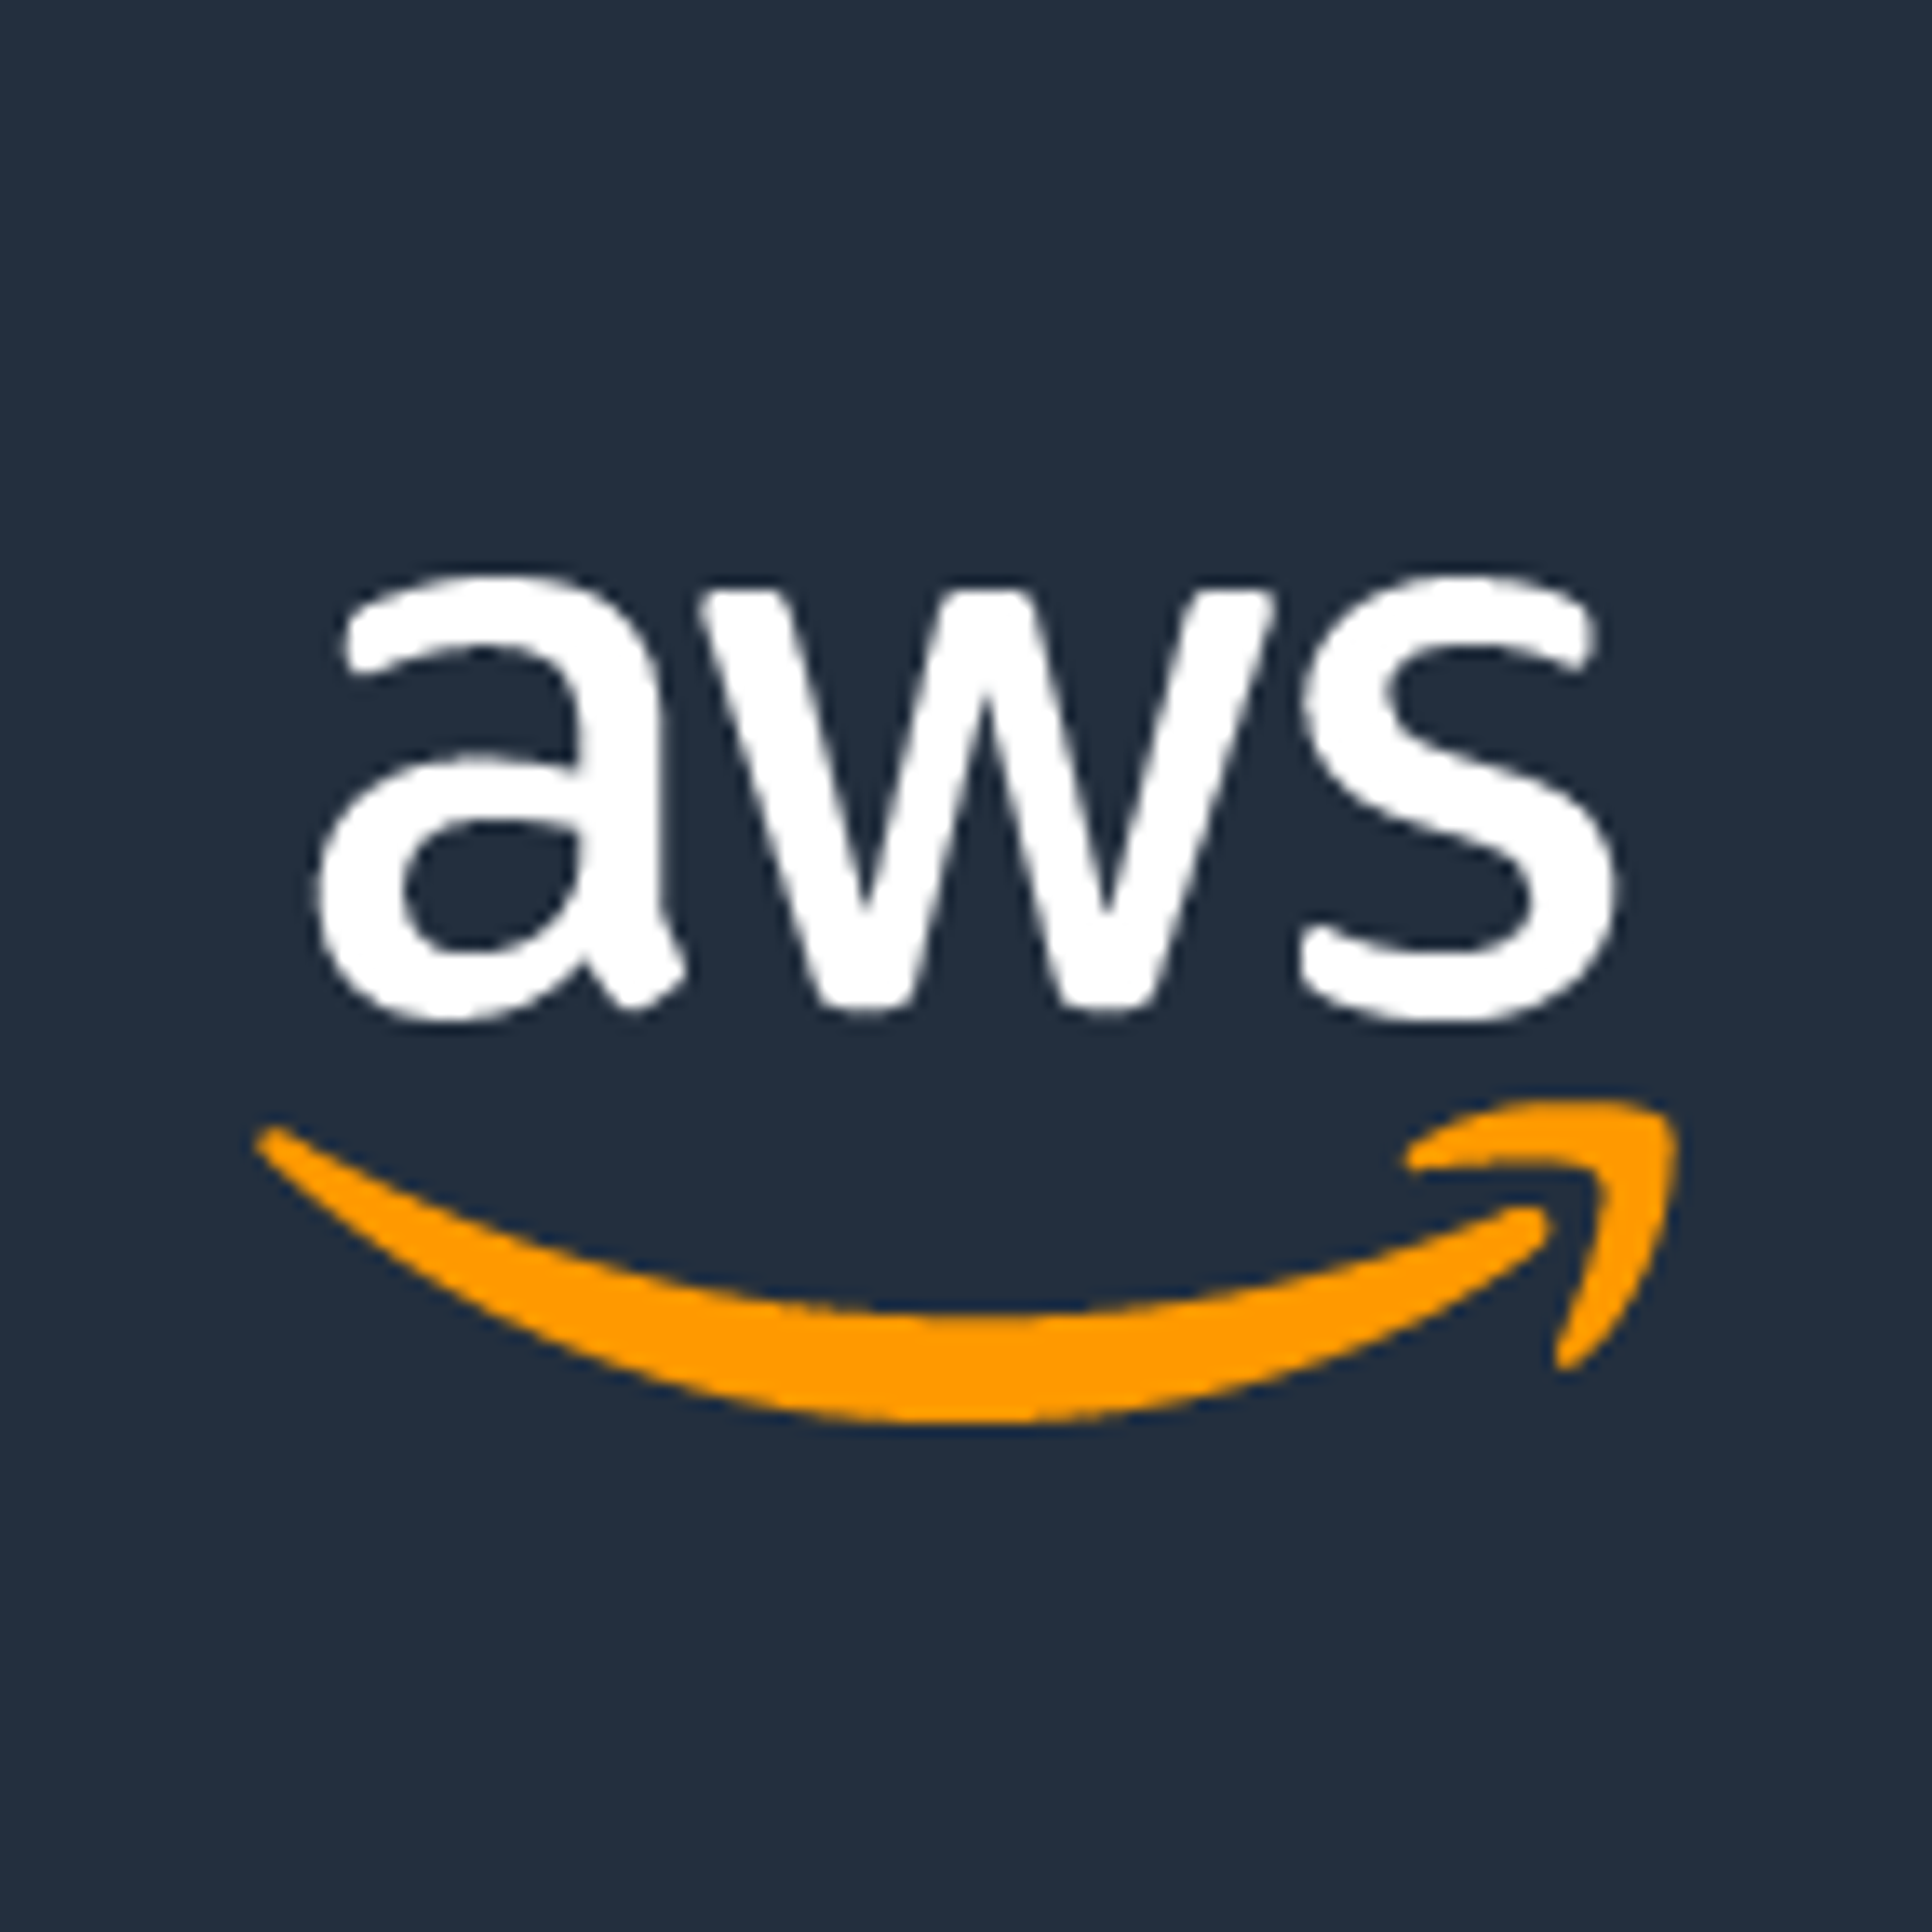 Amazon CloudFront Functions — 더 짧은 지연 시간으로 엣지에서 코드 실행을 위한 신규 기능 | Amazon Web Services